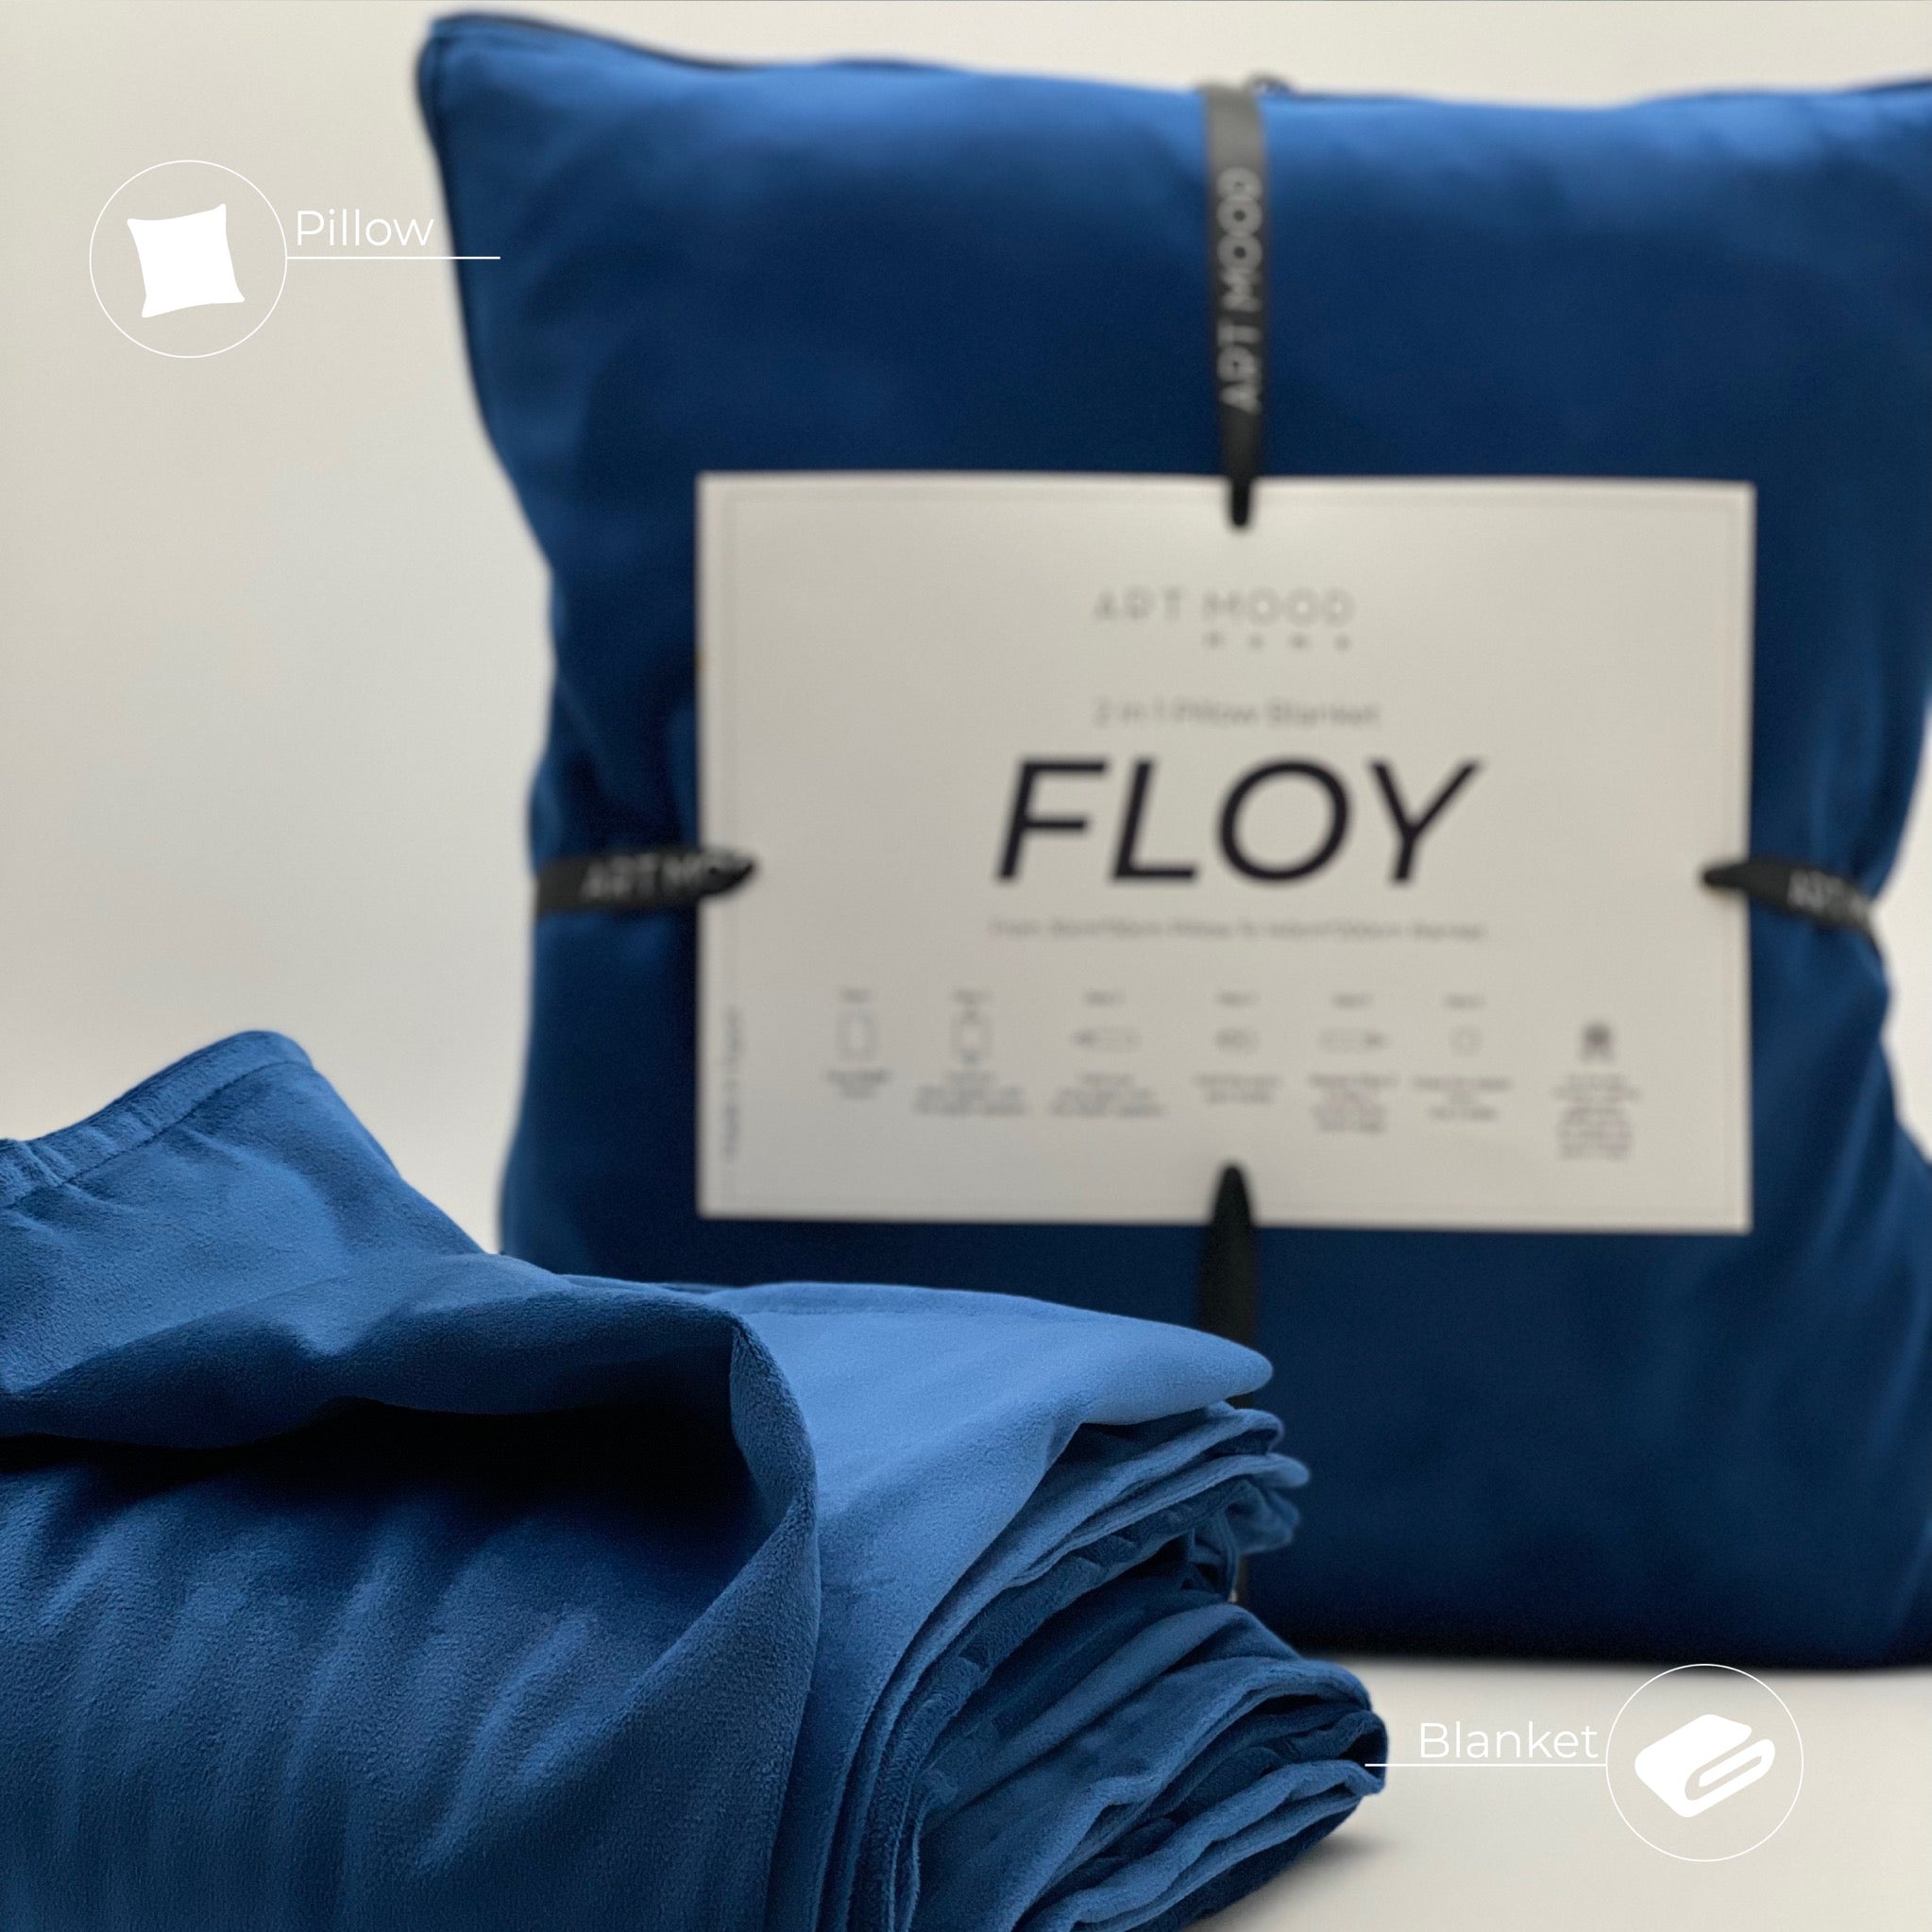 FLOY  2 in 1 Pillow Blanket